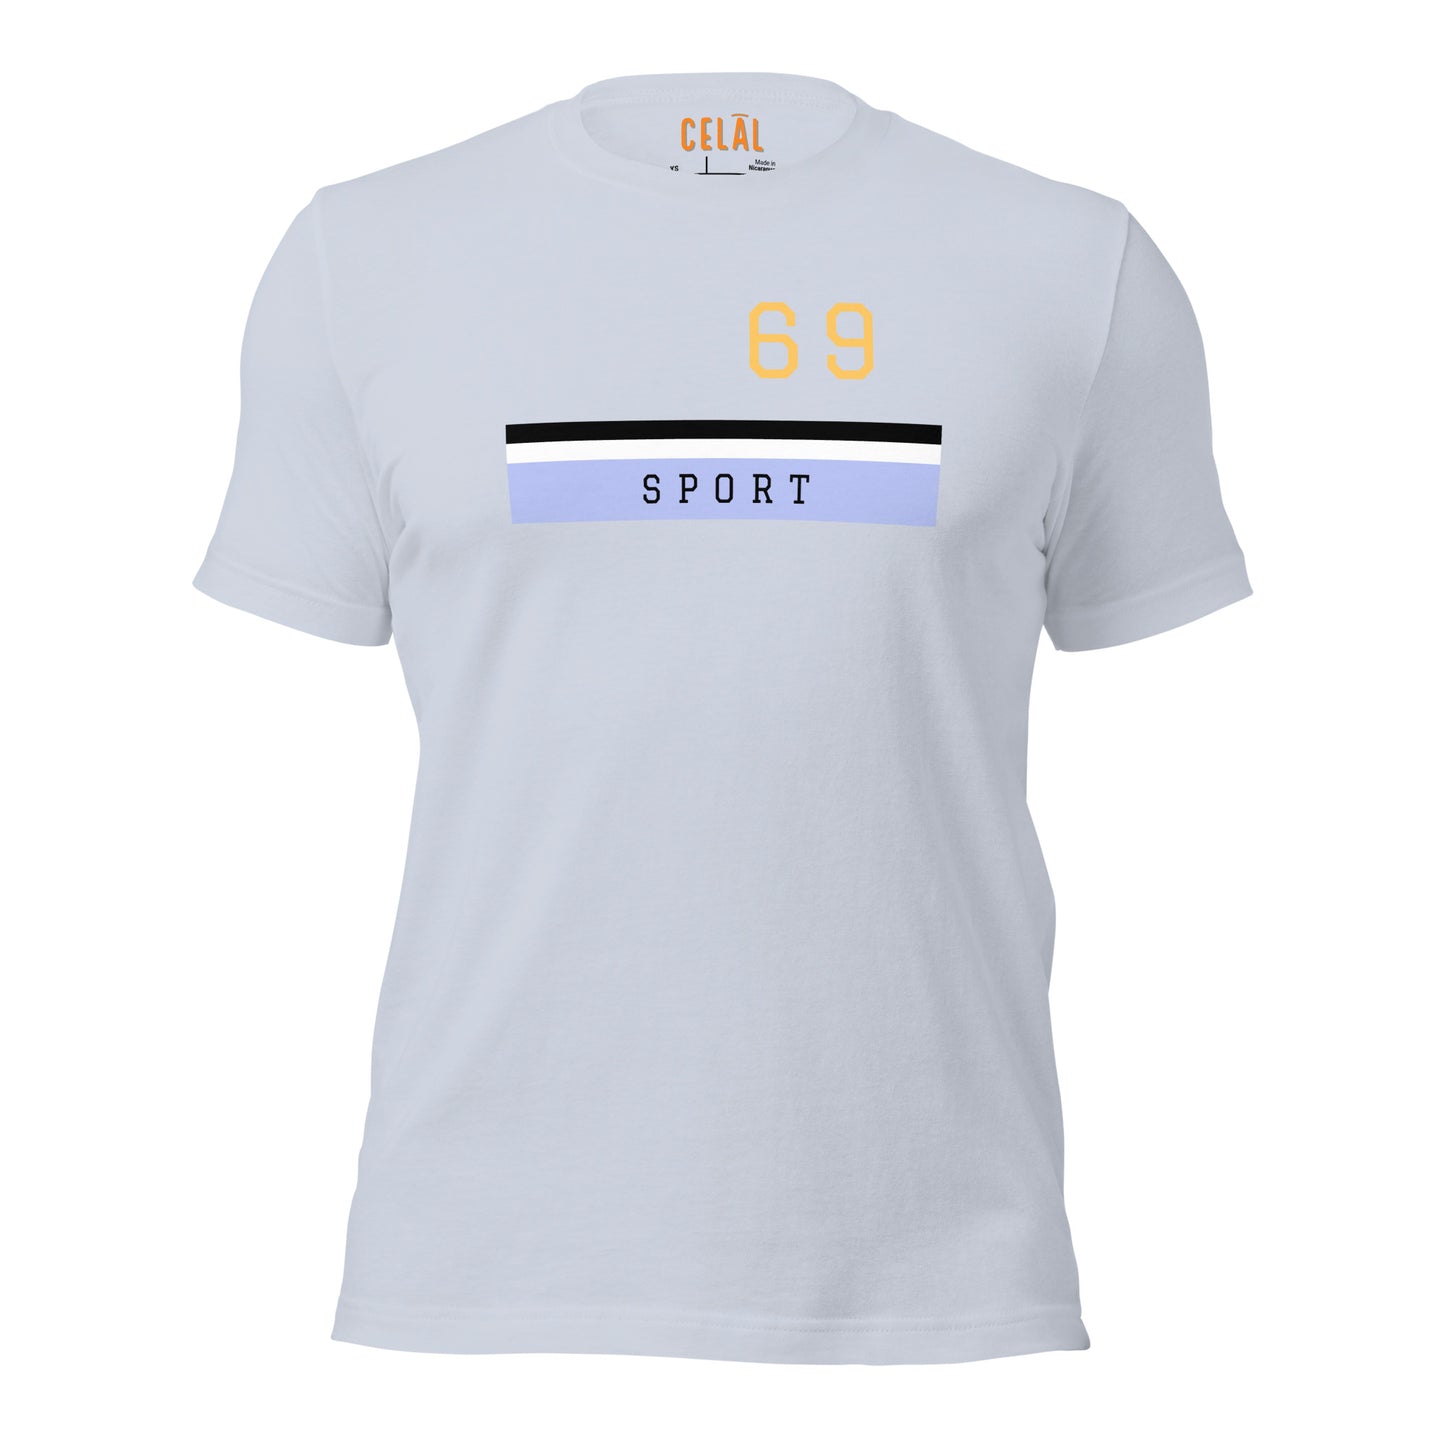 69 Unisex t-shirt